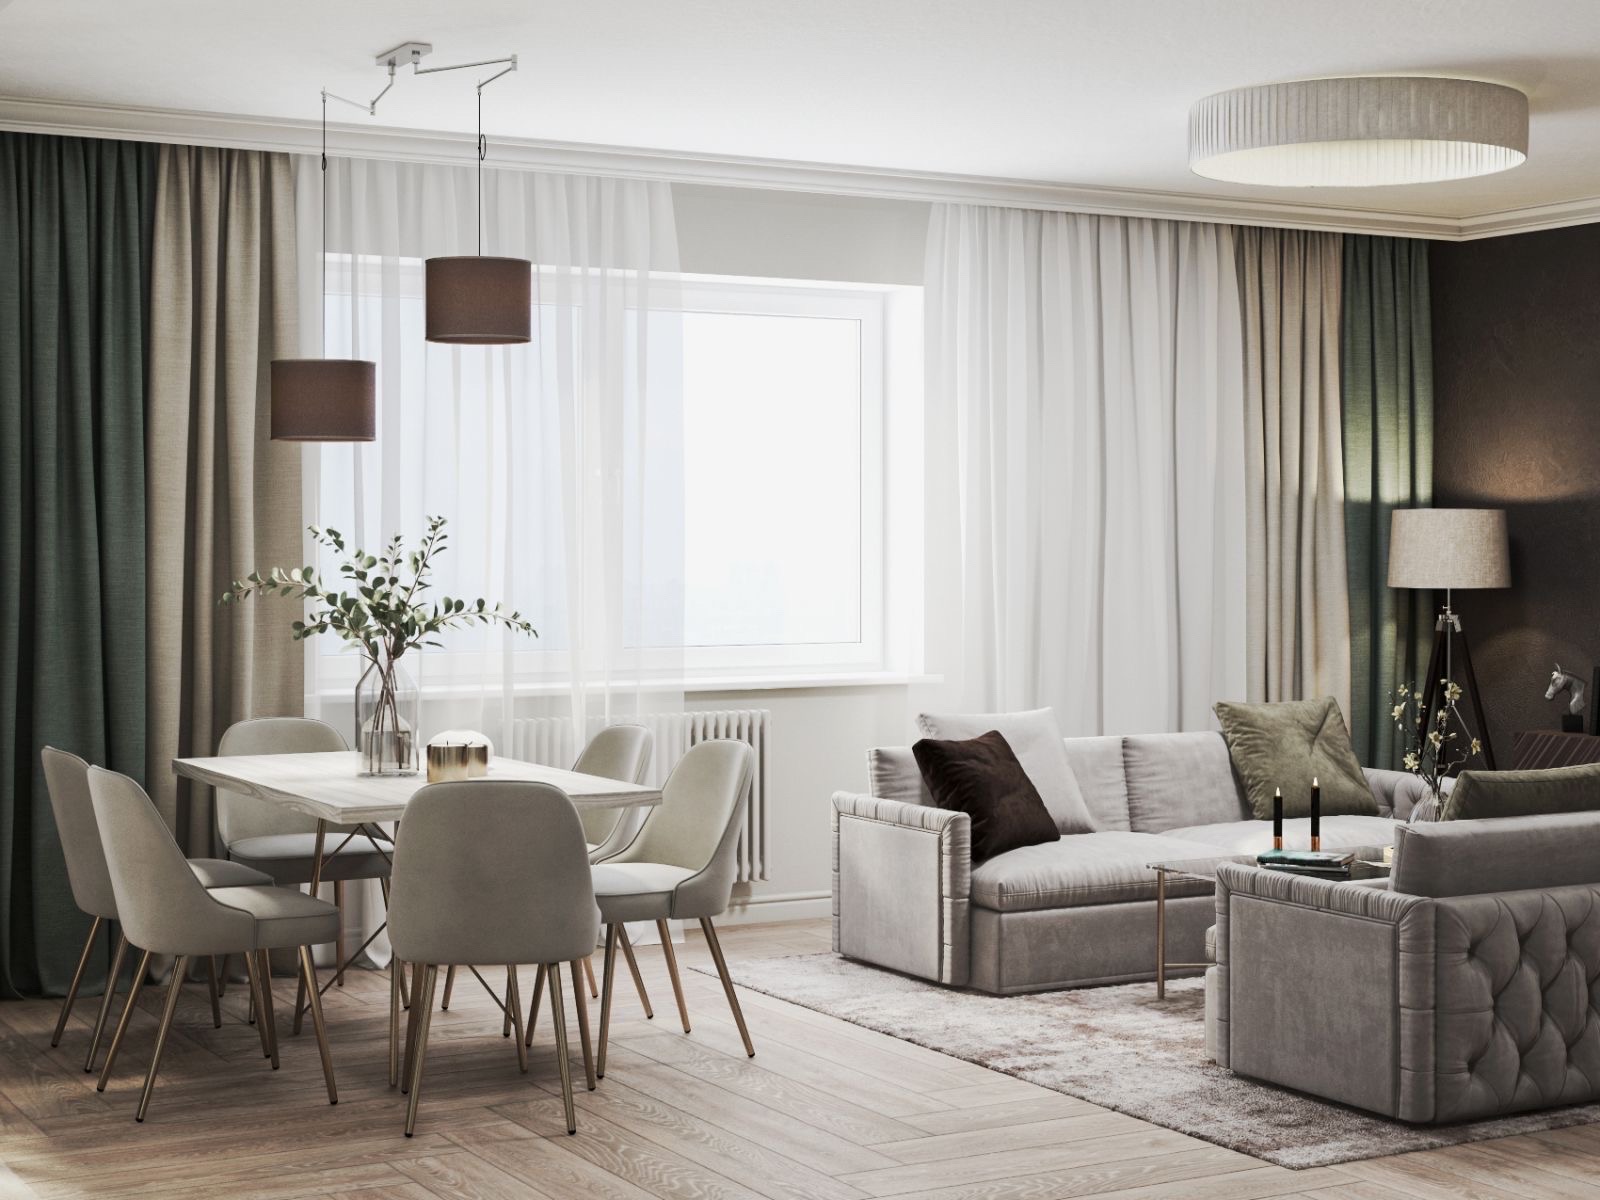 Luxury Modern Room Furniture